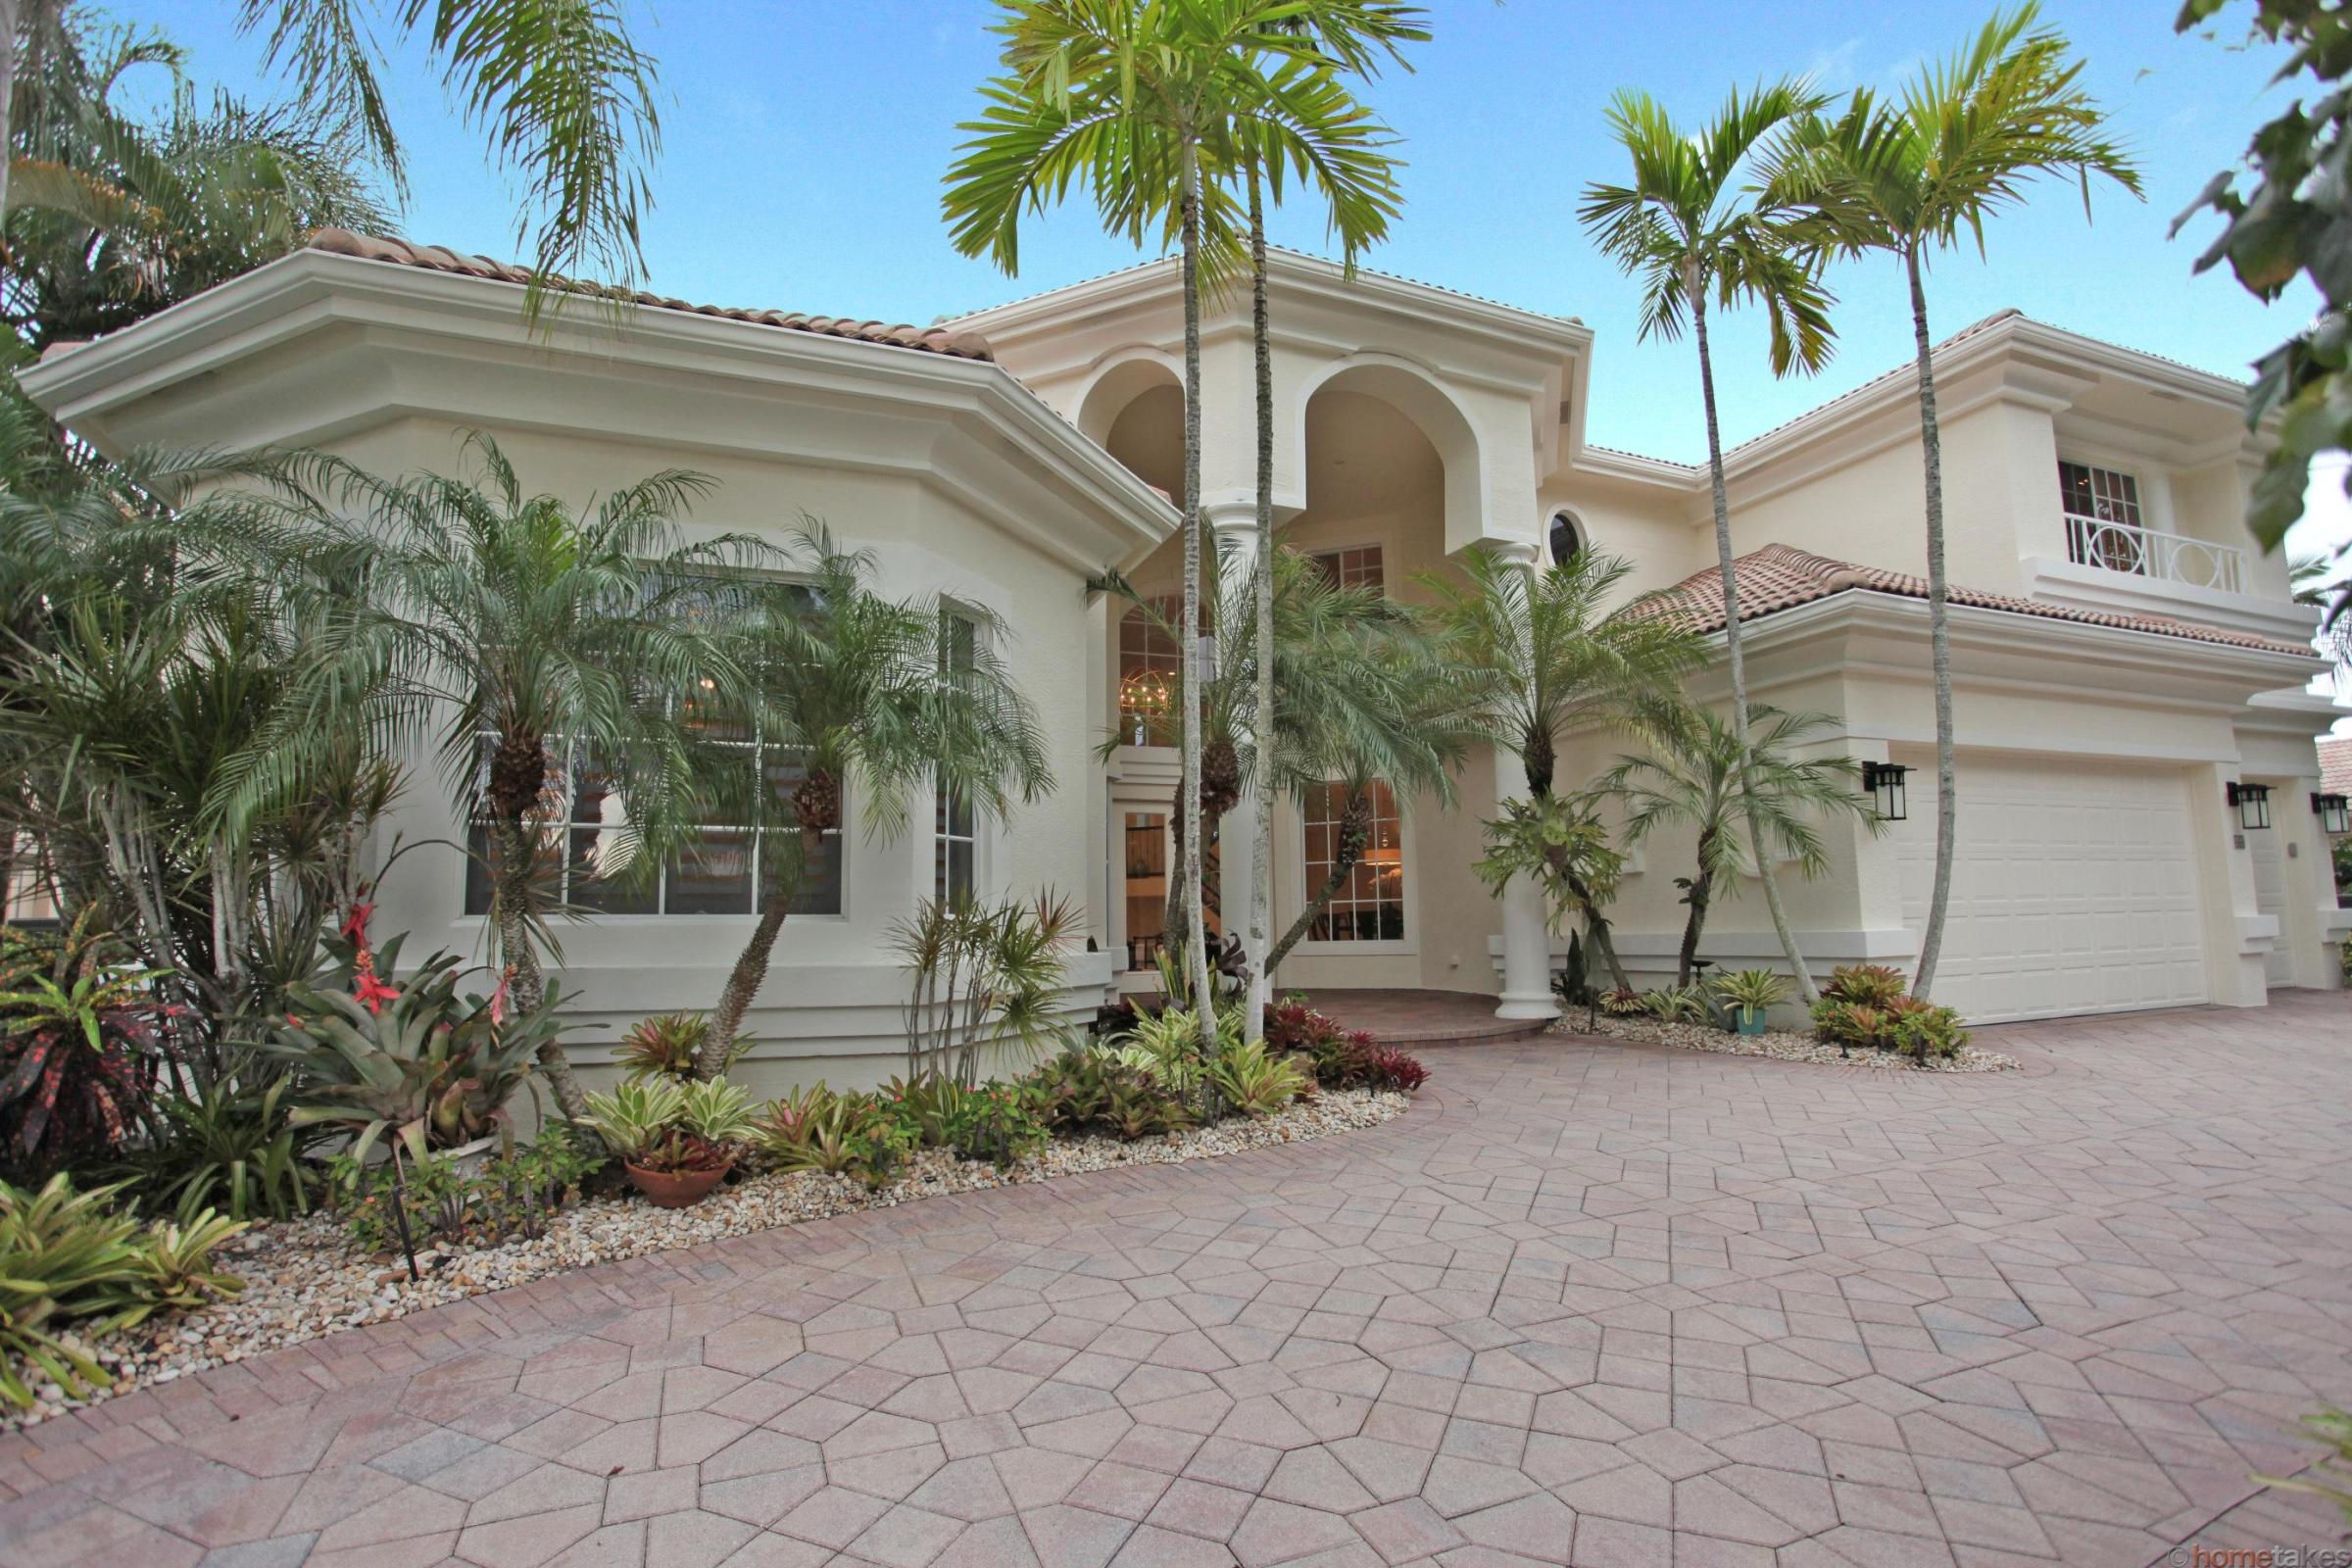 Coquina Estates at BallenIsles Palm Beach Gardens Homes for Sale